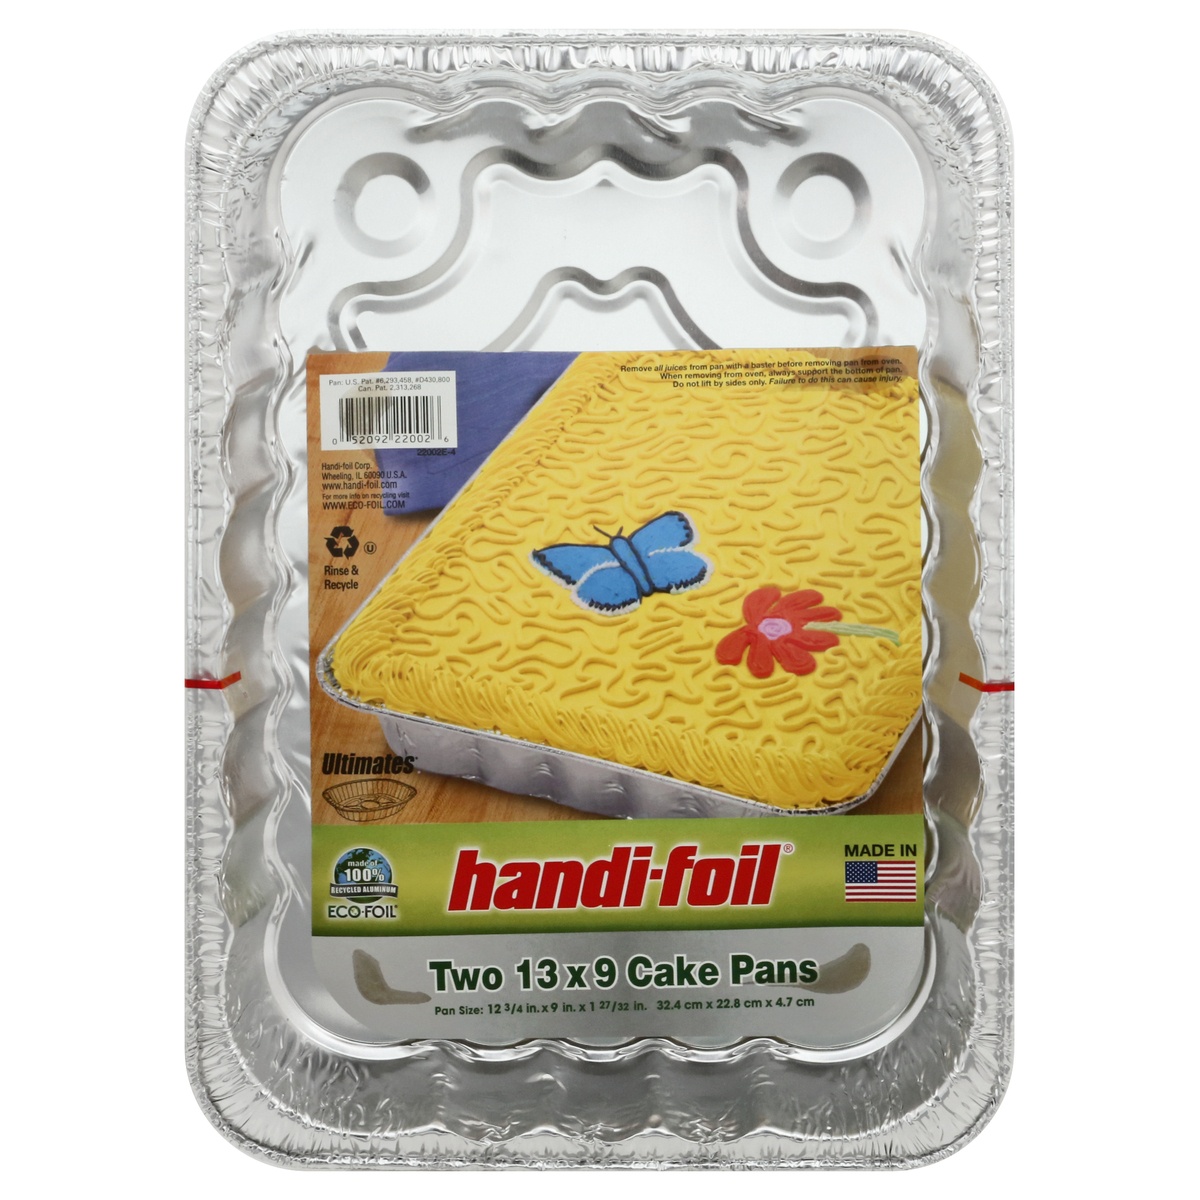 slide 1 of 9, Handi-foil Eco-Foil Cake Pans 13x9, 2 ct